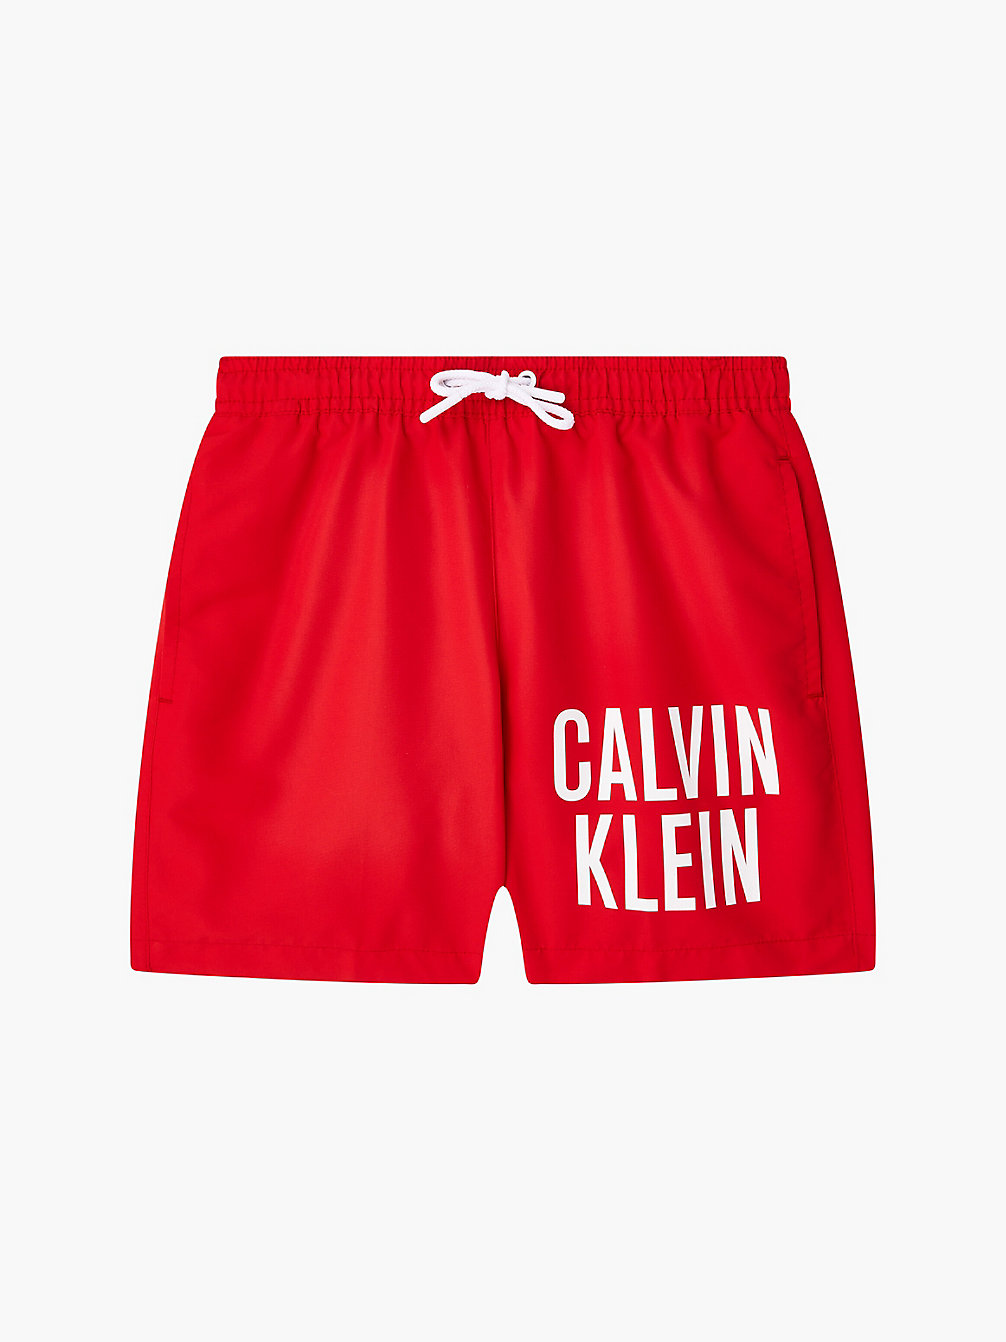 DEEP CRIMSON > Плавательные шорты для мальчиков - Intense Power > undefined boys - Calvin Klein